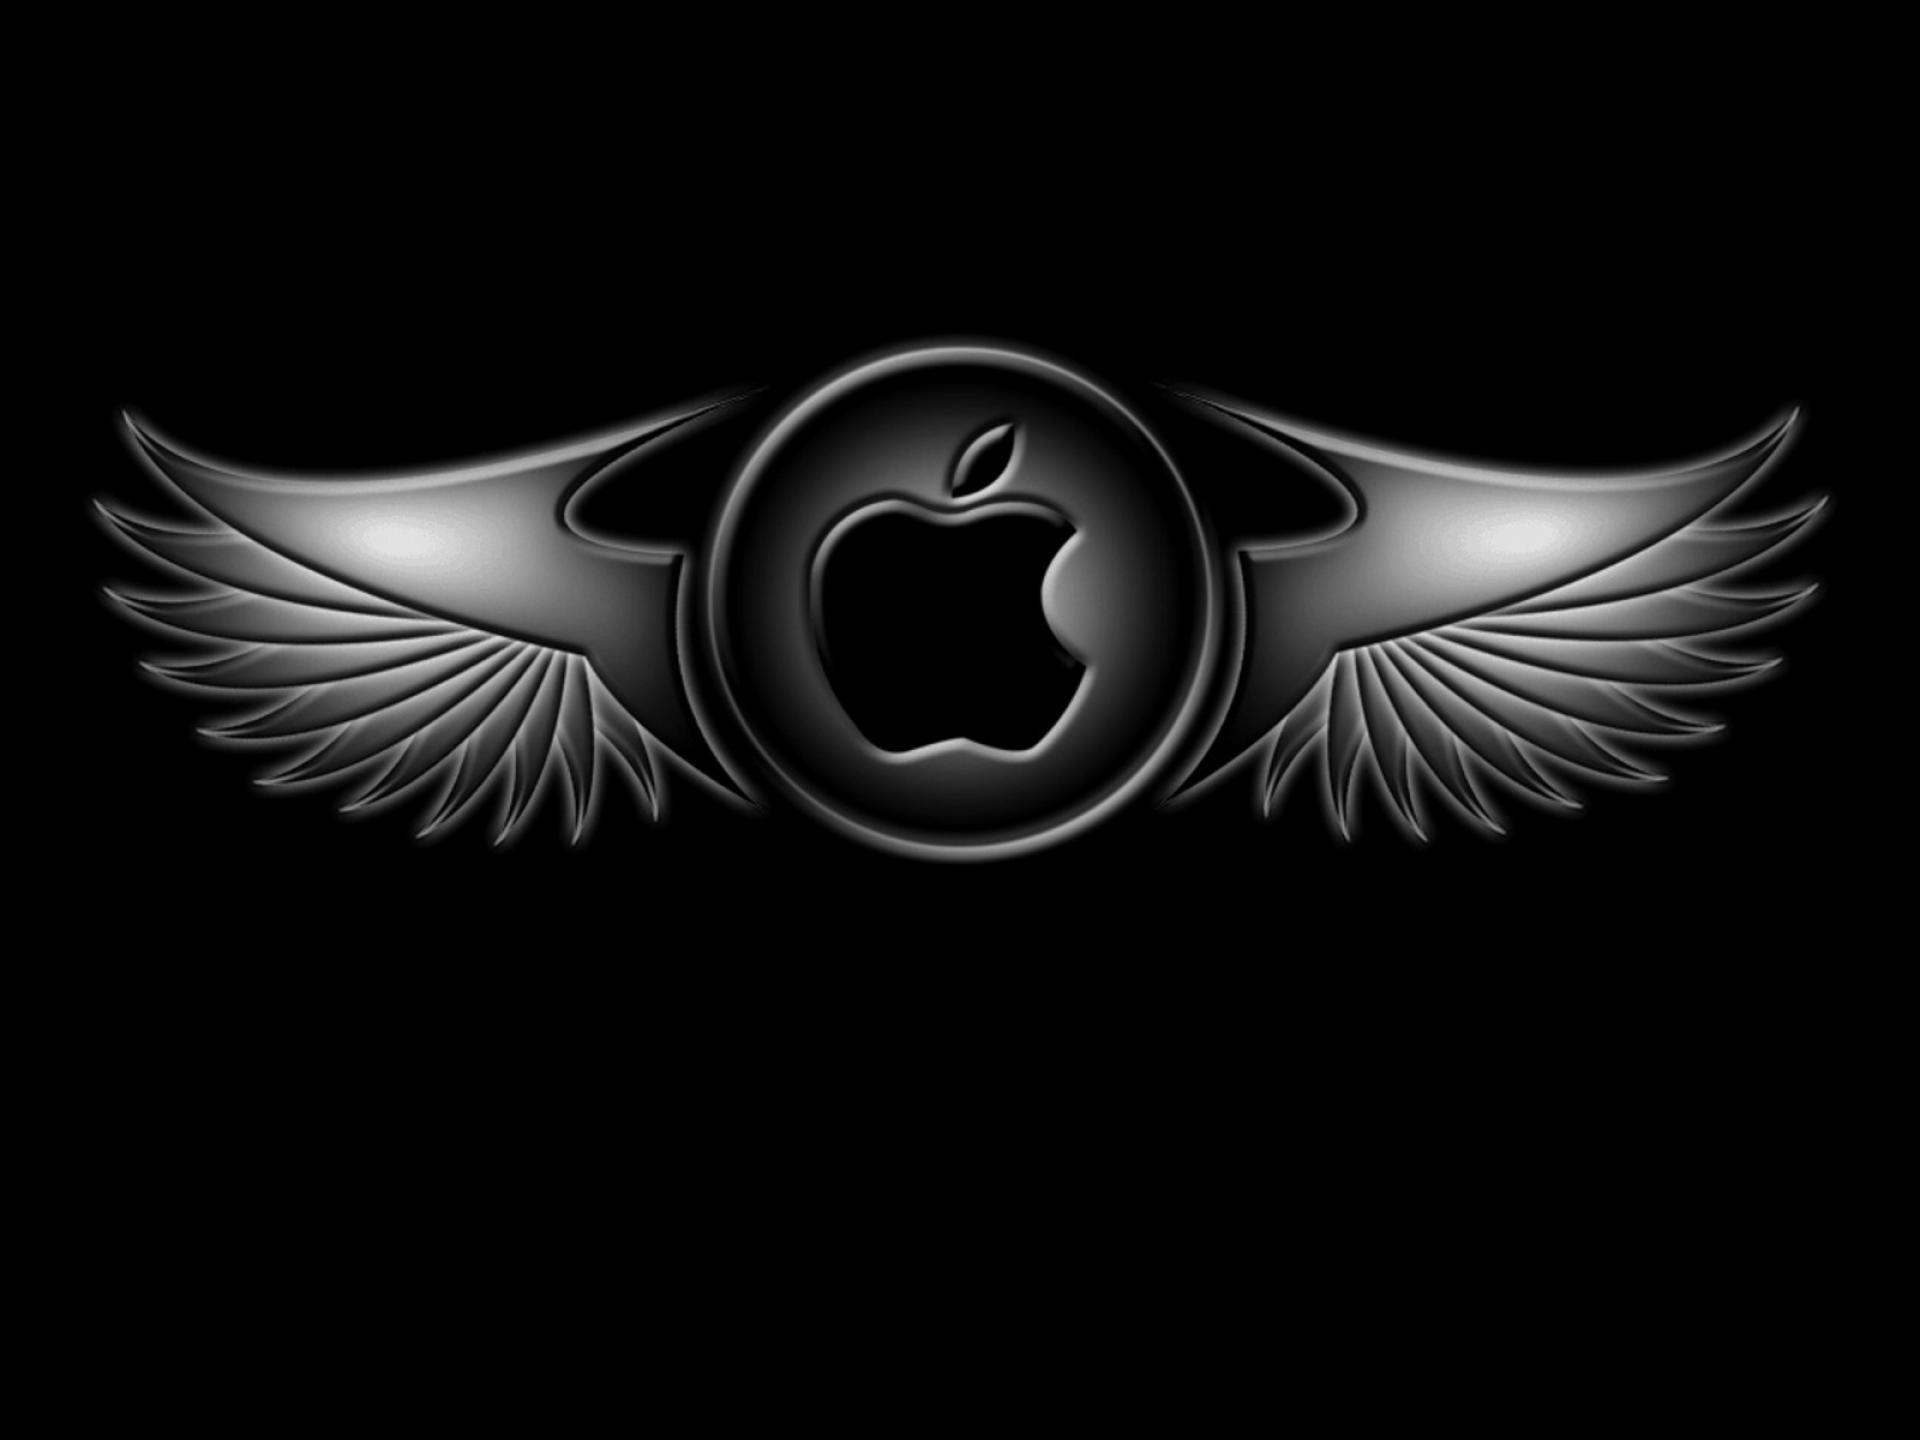 apple wallpaper hd,ala,emblema,buio,simbolo,bianco e nero